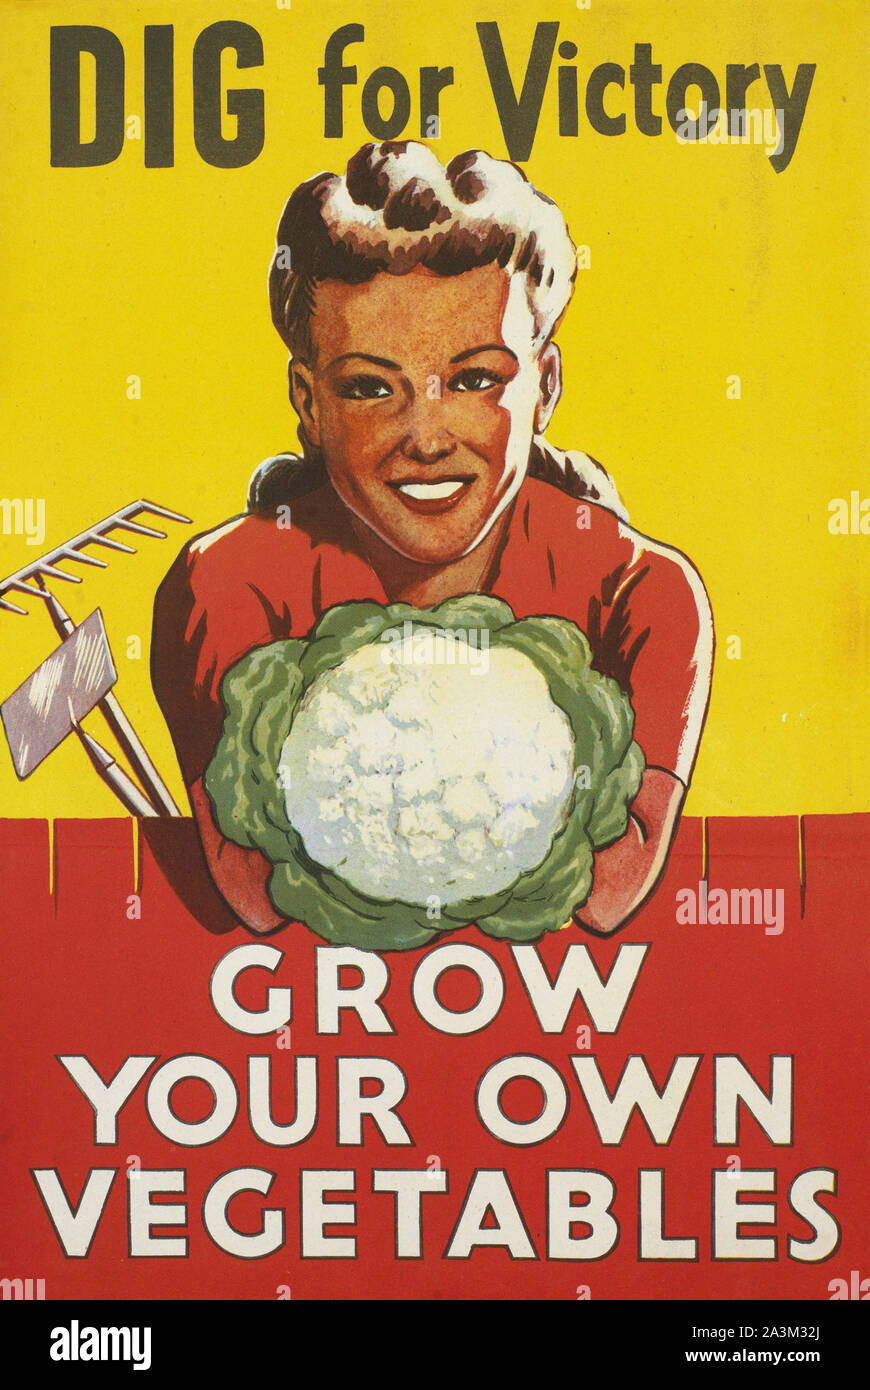 Dig for Victory - Grow your own Vegetes - Poster propaganda della seconda Guerra Mondiale britannico Foto Stock